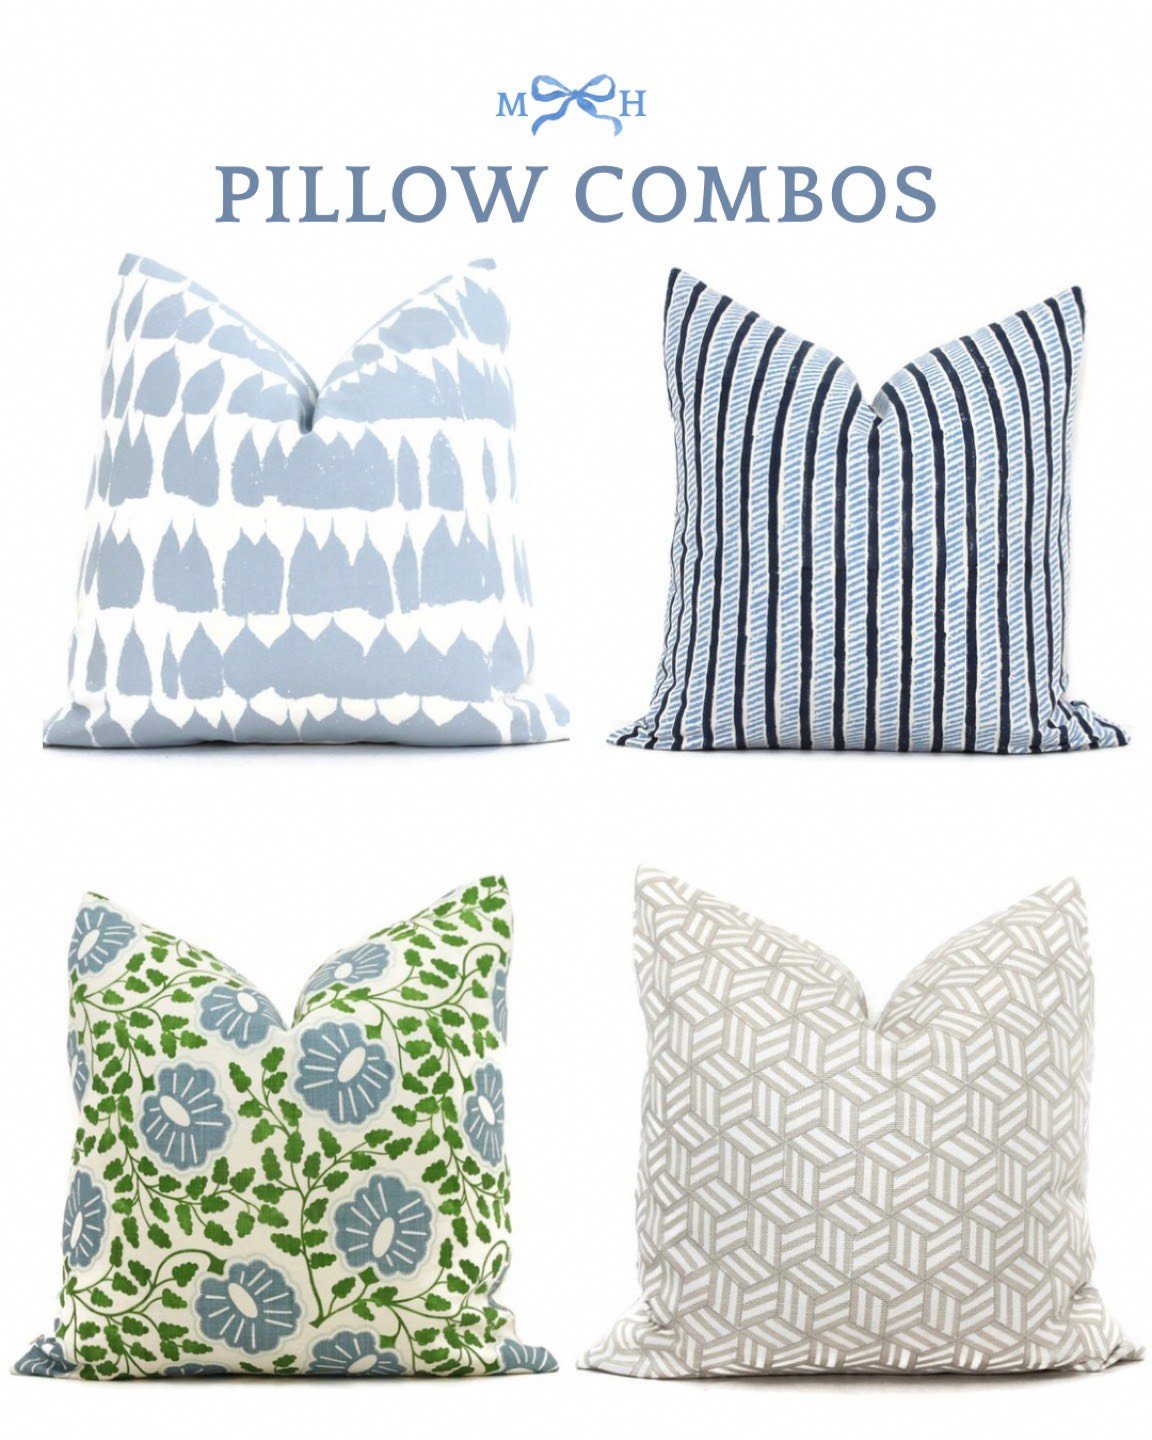 How to Mix Decorative Pillows (+ 20 guaranteed-to-look-good